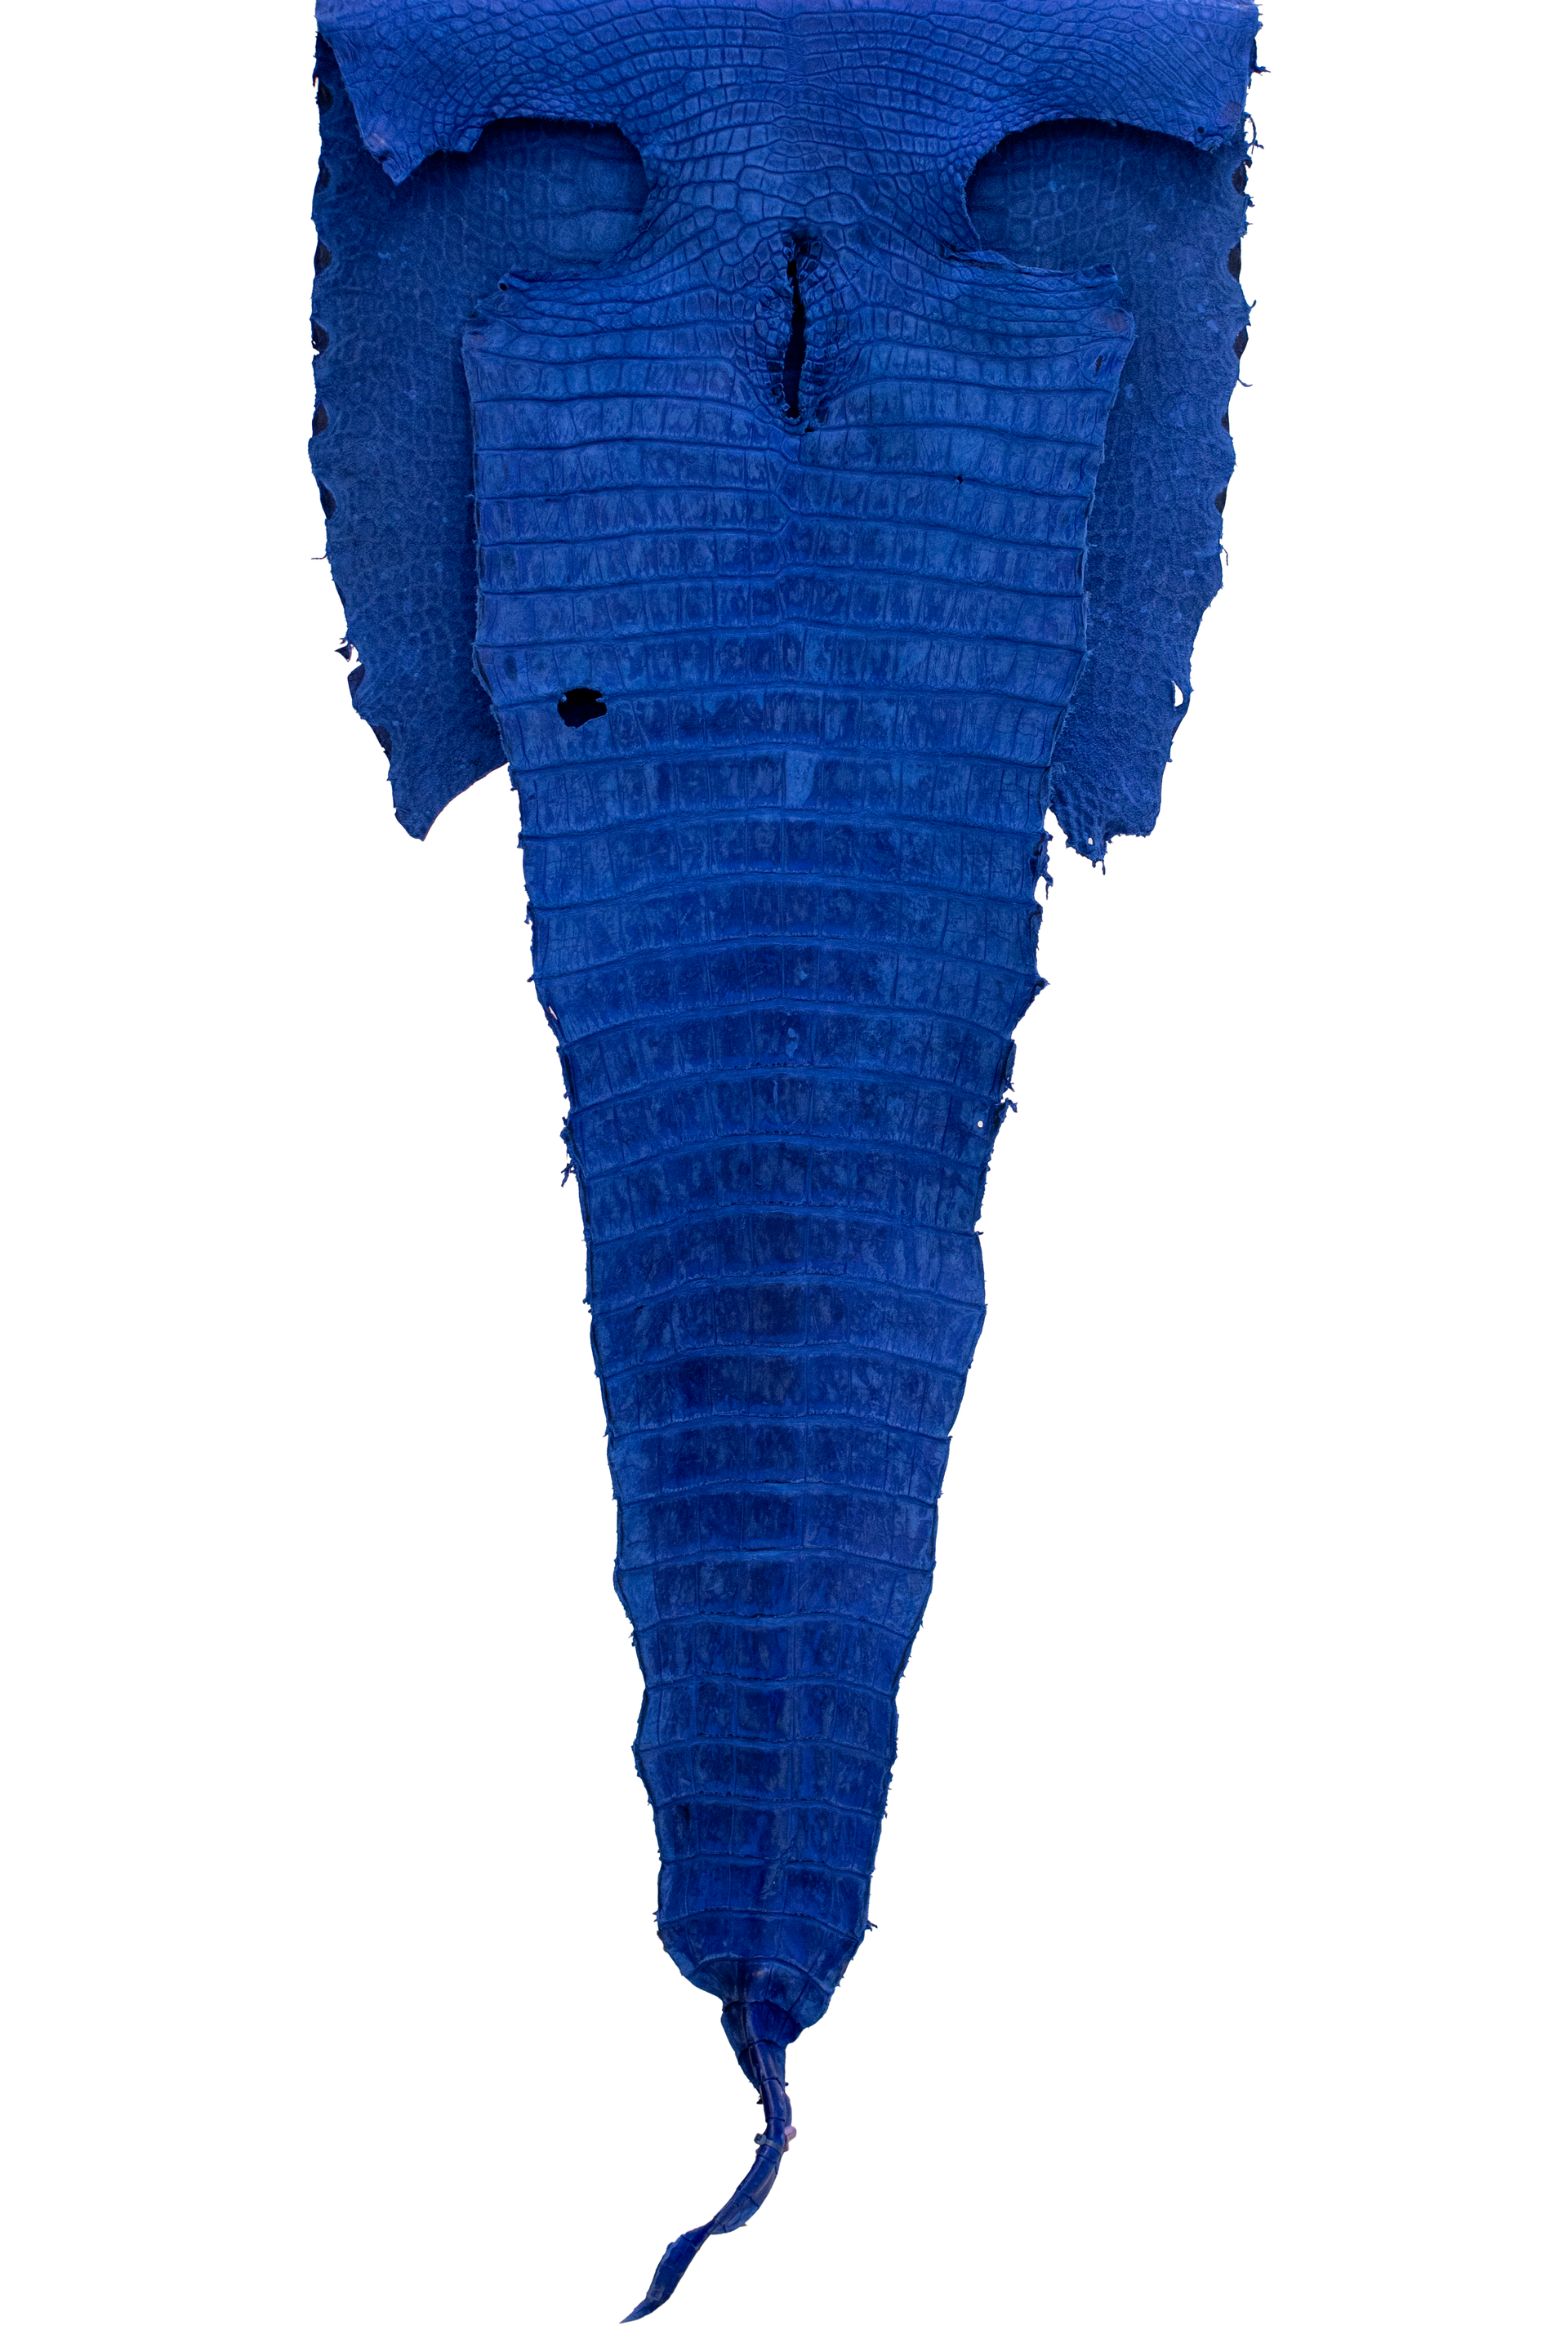 67 cm Grade 2/3 Navy Blue Nubuck Wild American Alligator Leather - Tag: FL21-0081171